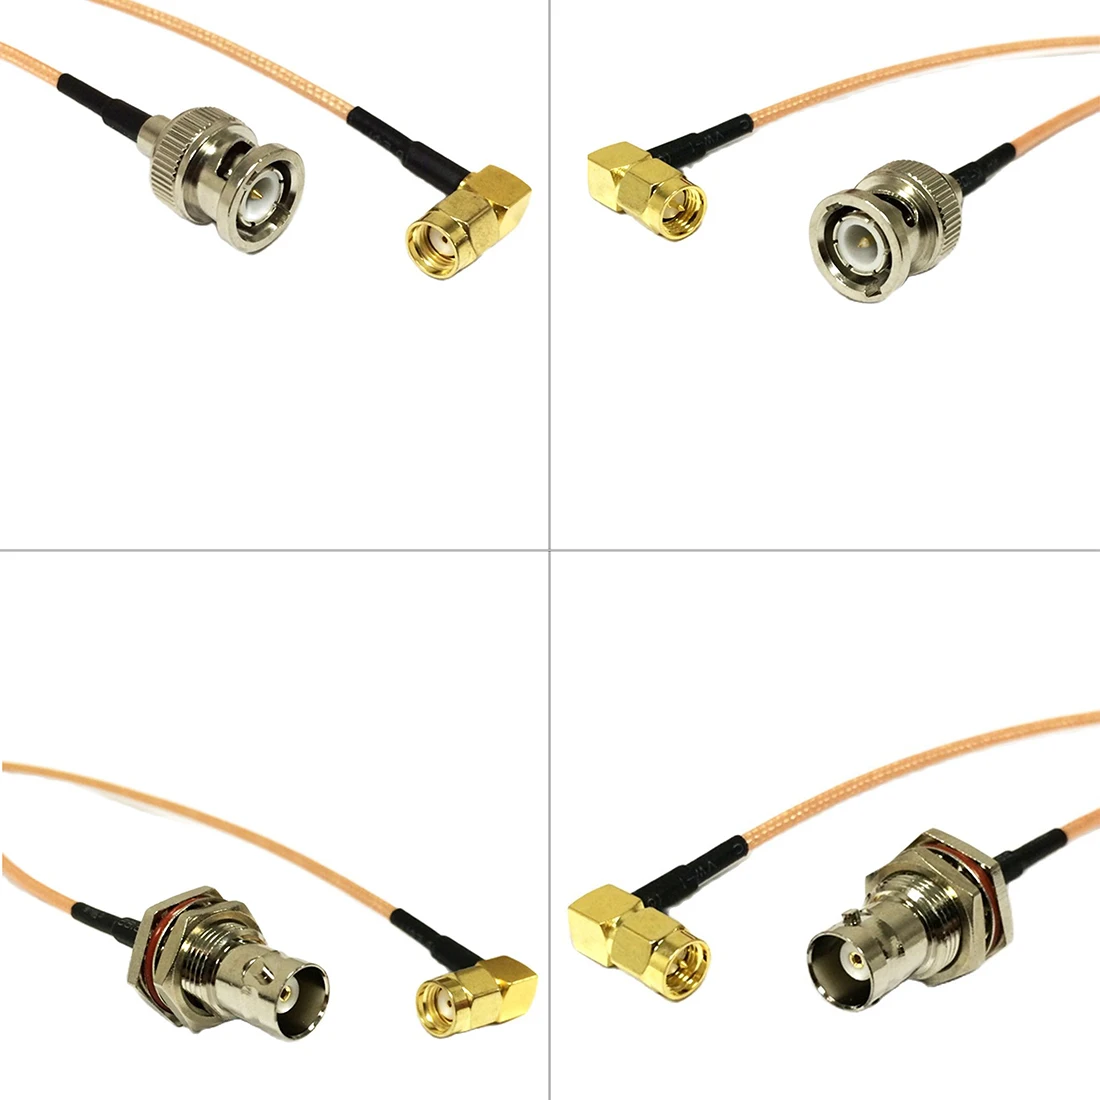 RP SMA Plug to BNC Male/ Female Bulkhead Pigtail Cable Adapter 15cm/30cm/50cm